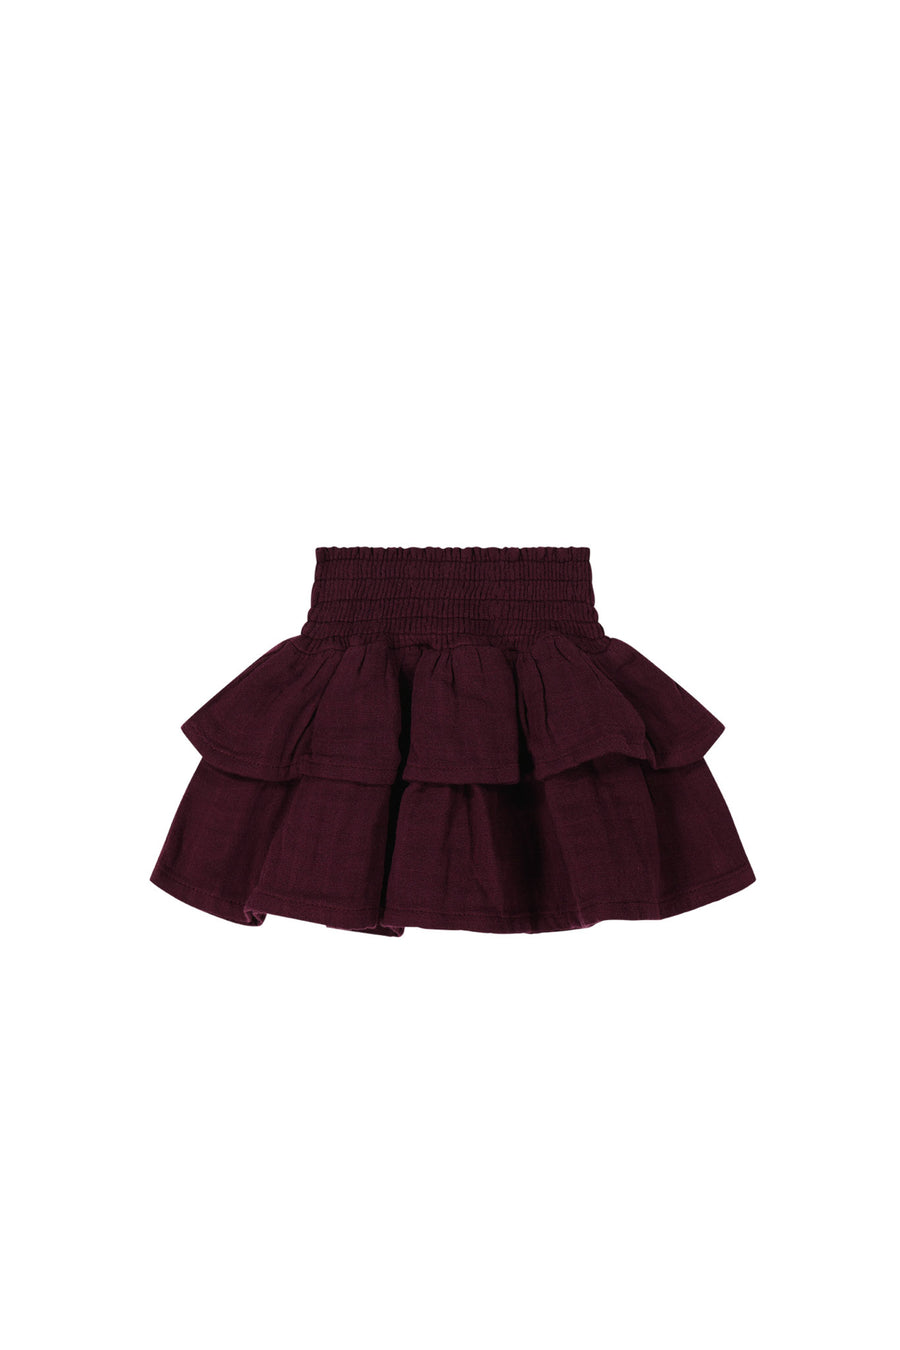 Organic Cotton Muslin Samantha Skirt - Fig Childrens Skirt from Jamie Kay NZ